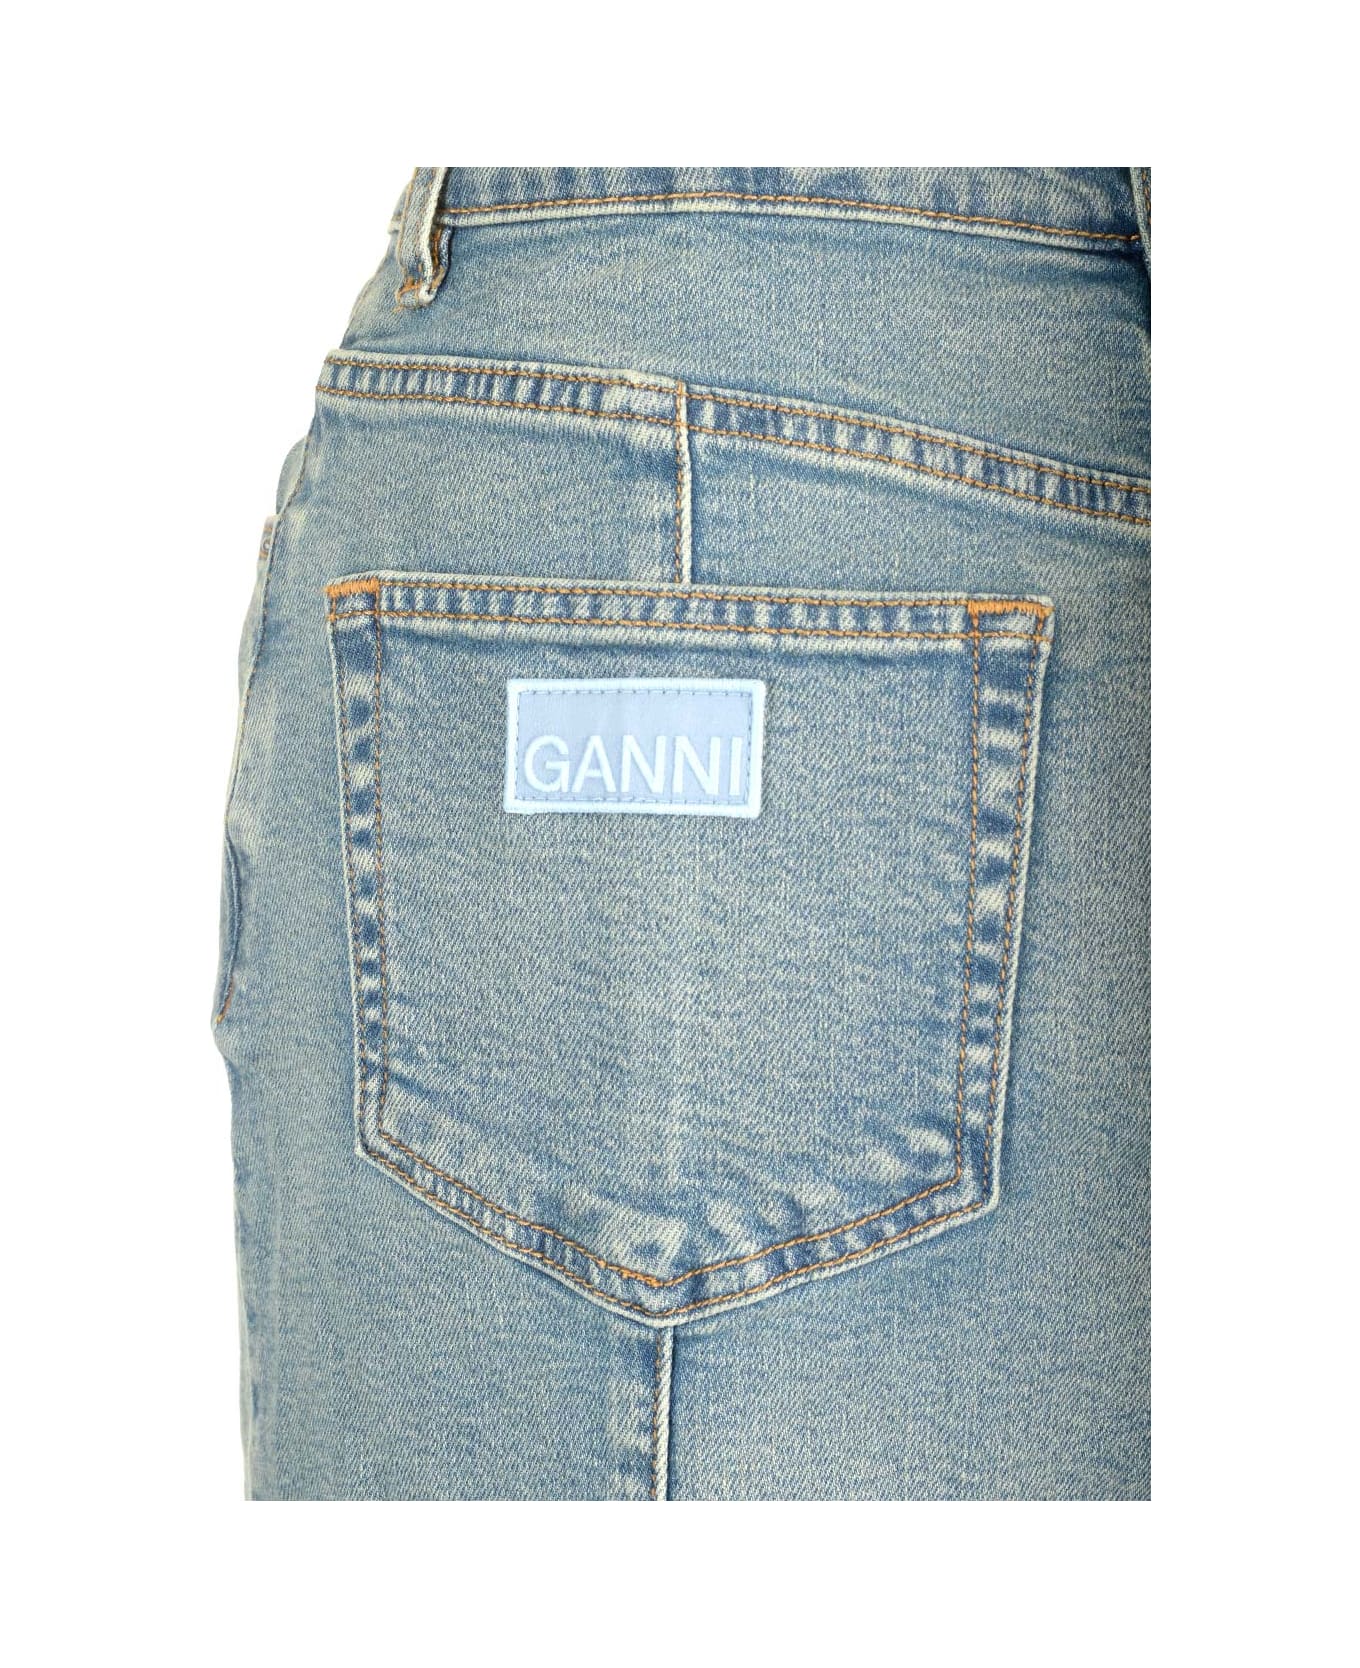 Ganni Peplum Midi Skirt - Tint wash スカート